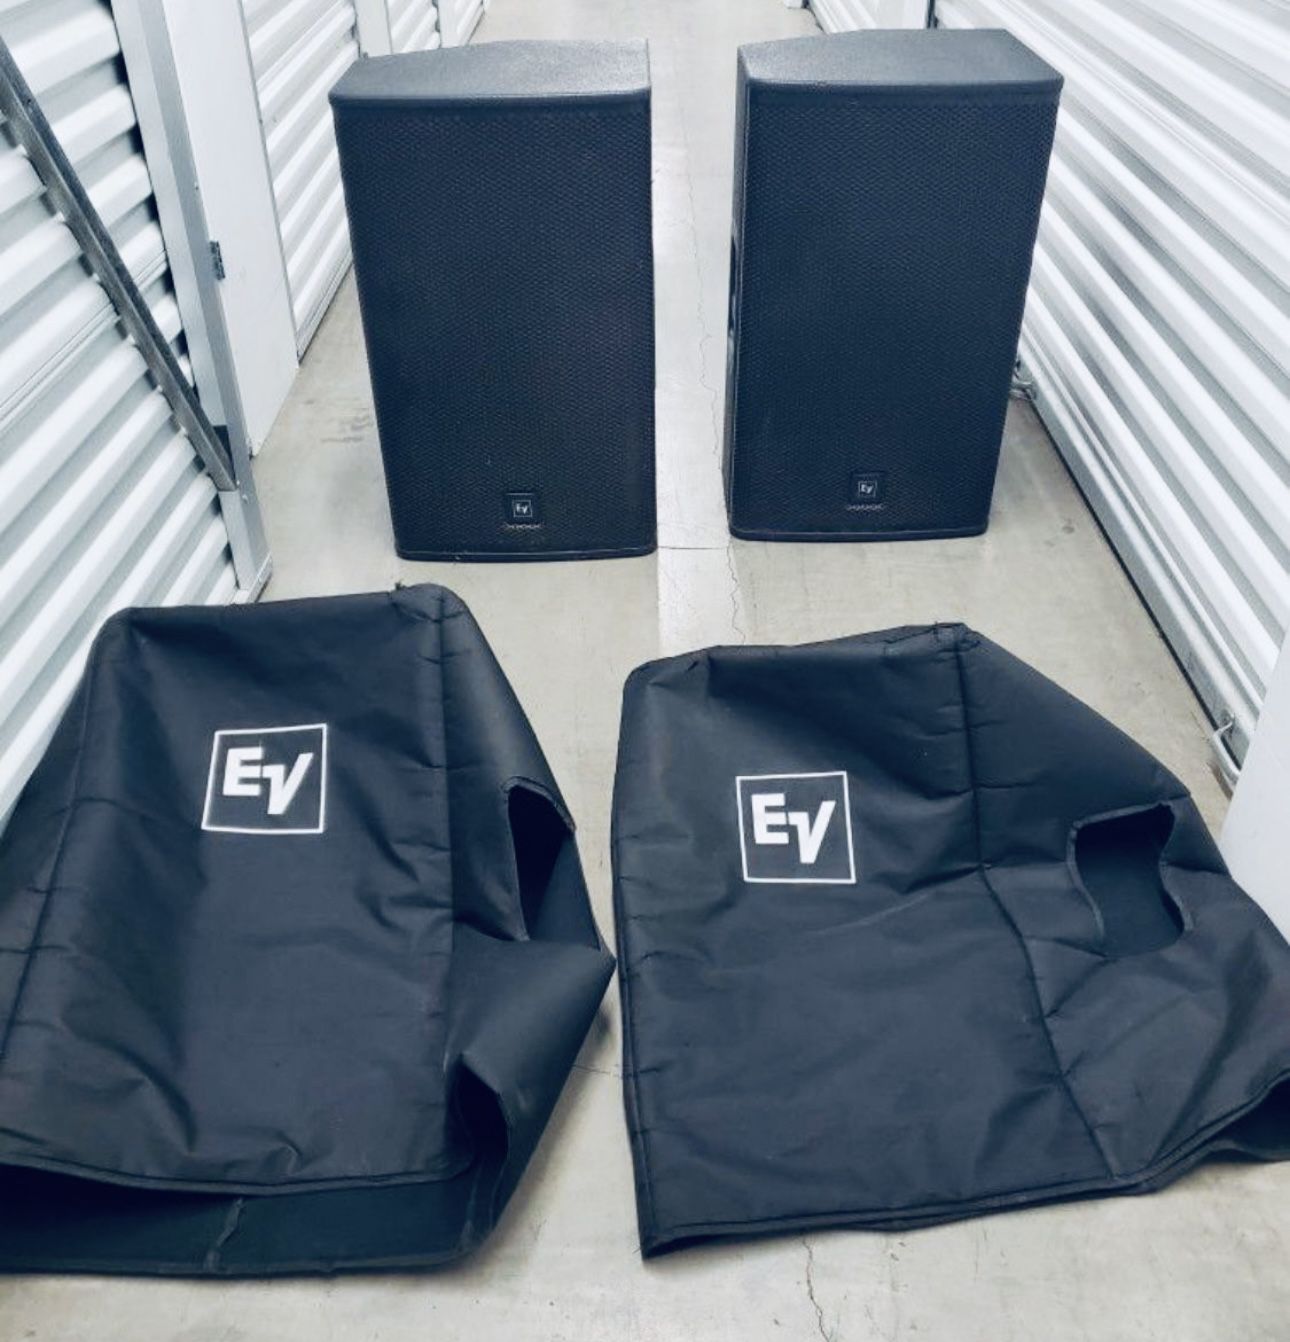 Electrovoice - EV ELX115P PAIR Speaker  1000 Watts Pure Power Each One 2 include Yes 2 Speaker plus 2 ev original bags